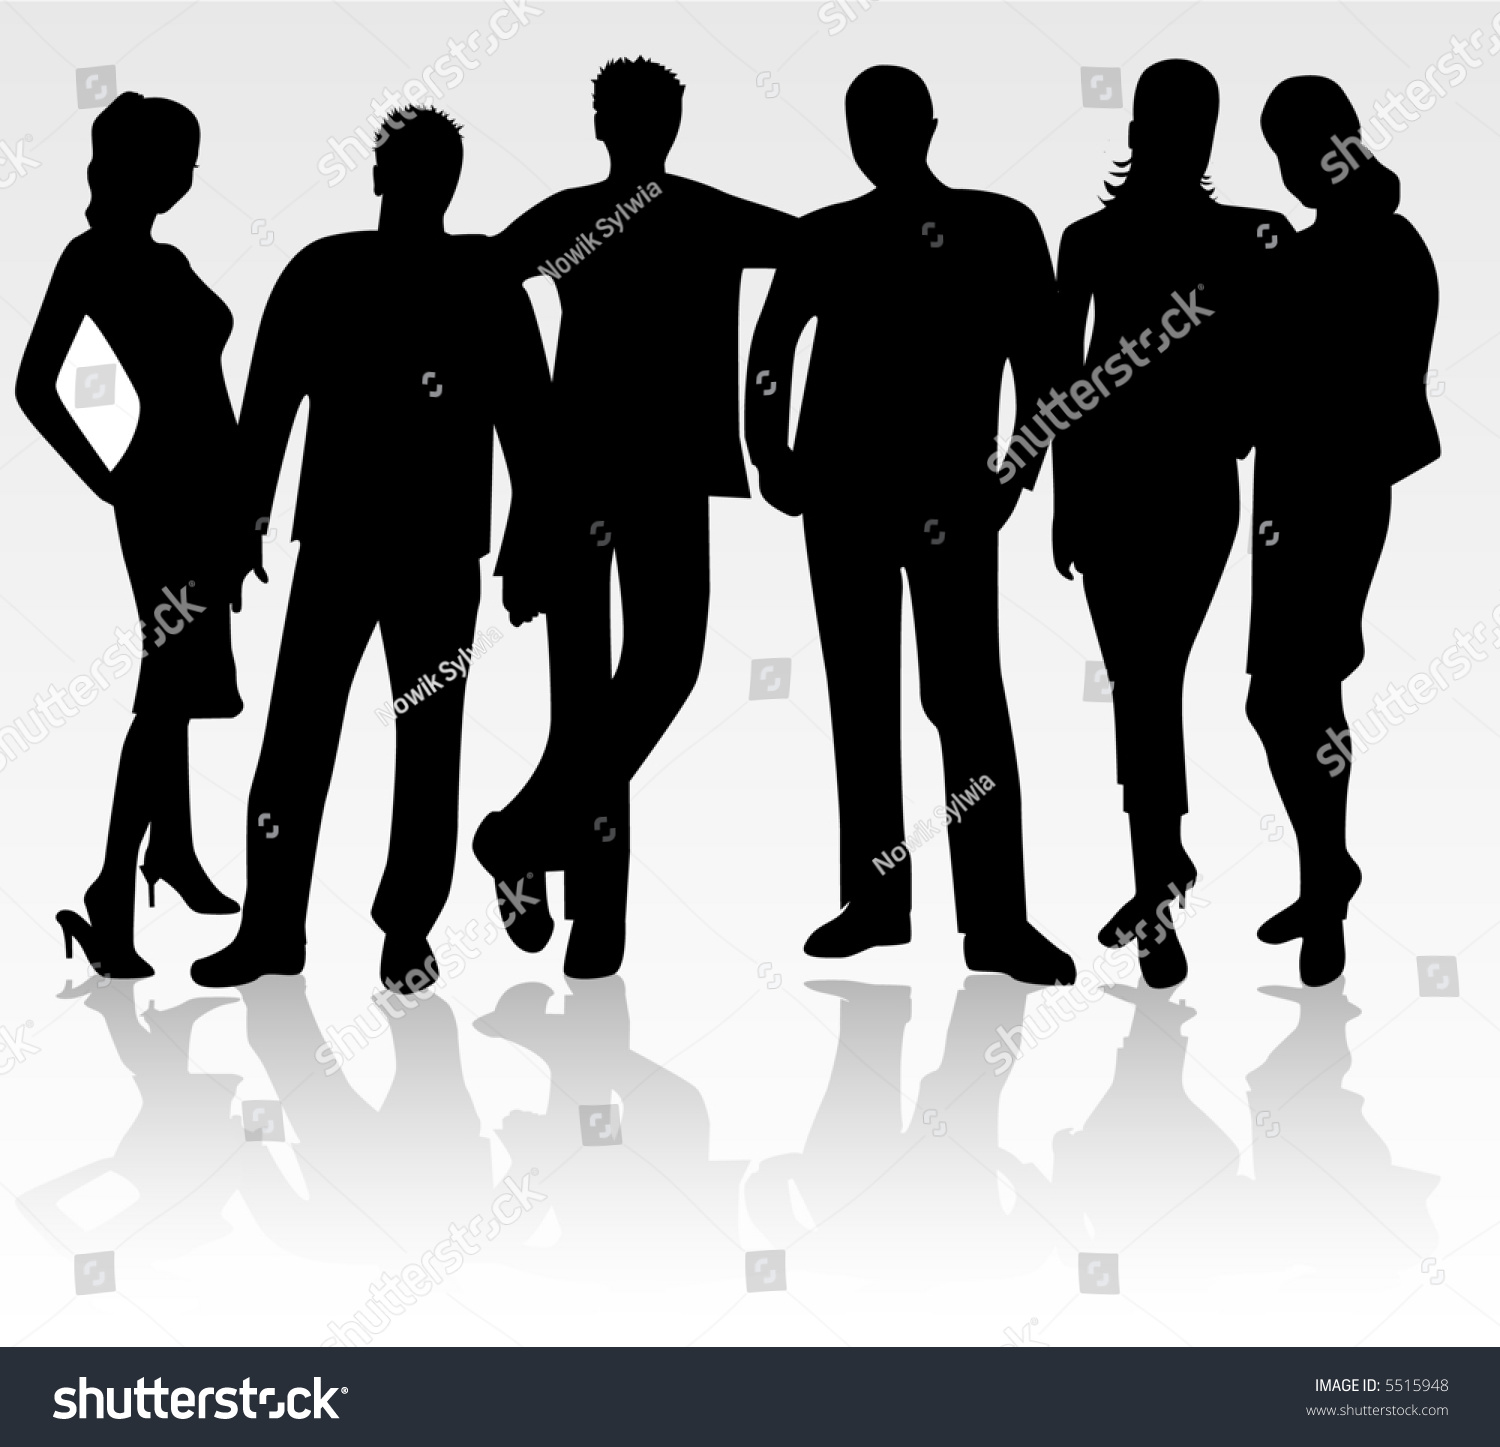 Group Of Friend , Vector Work - 5515948 : Shutterstock